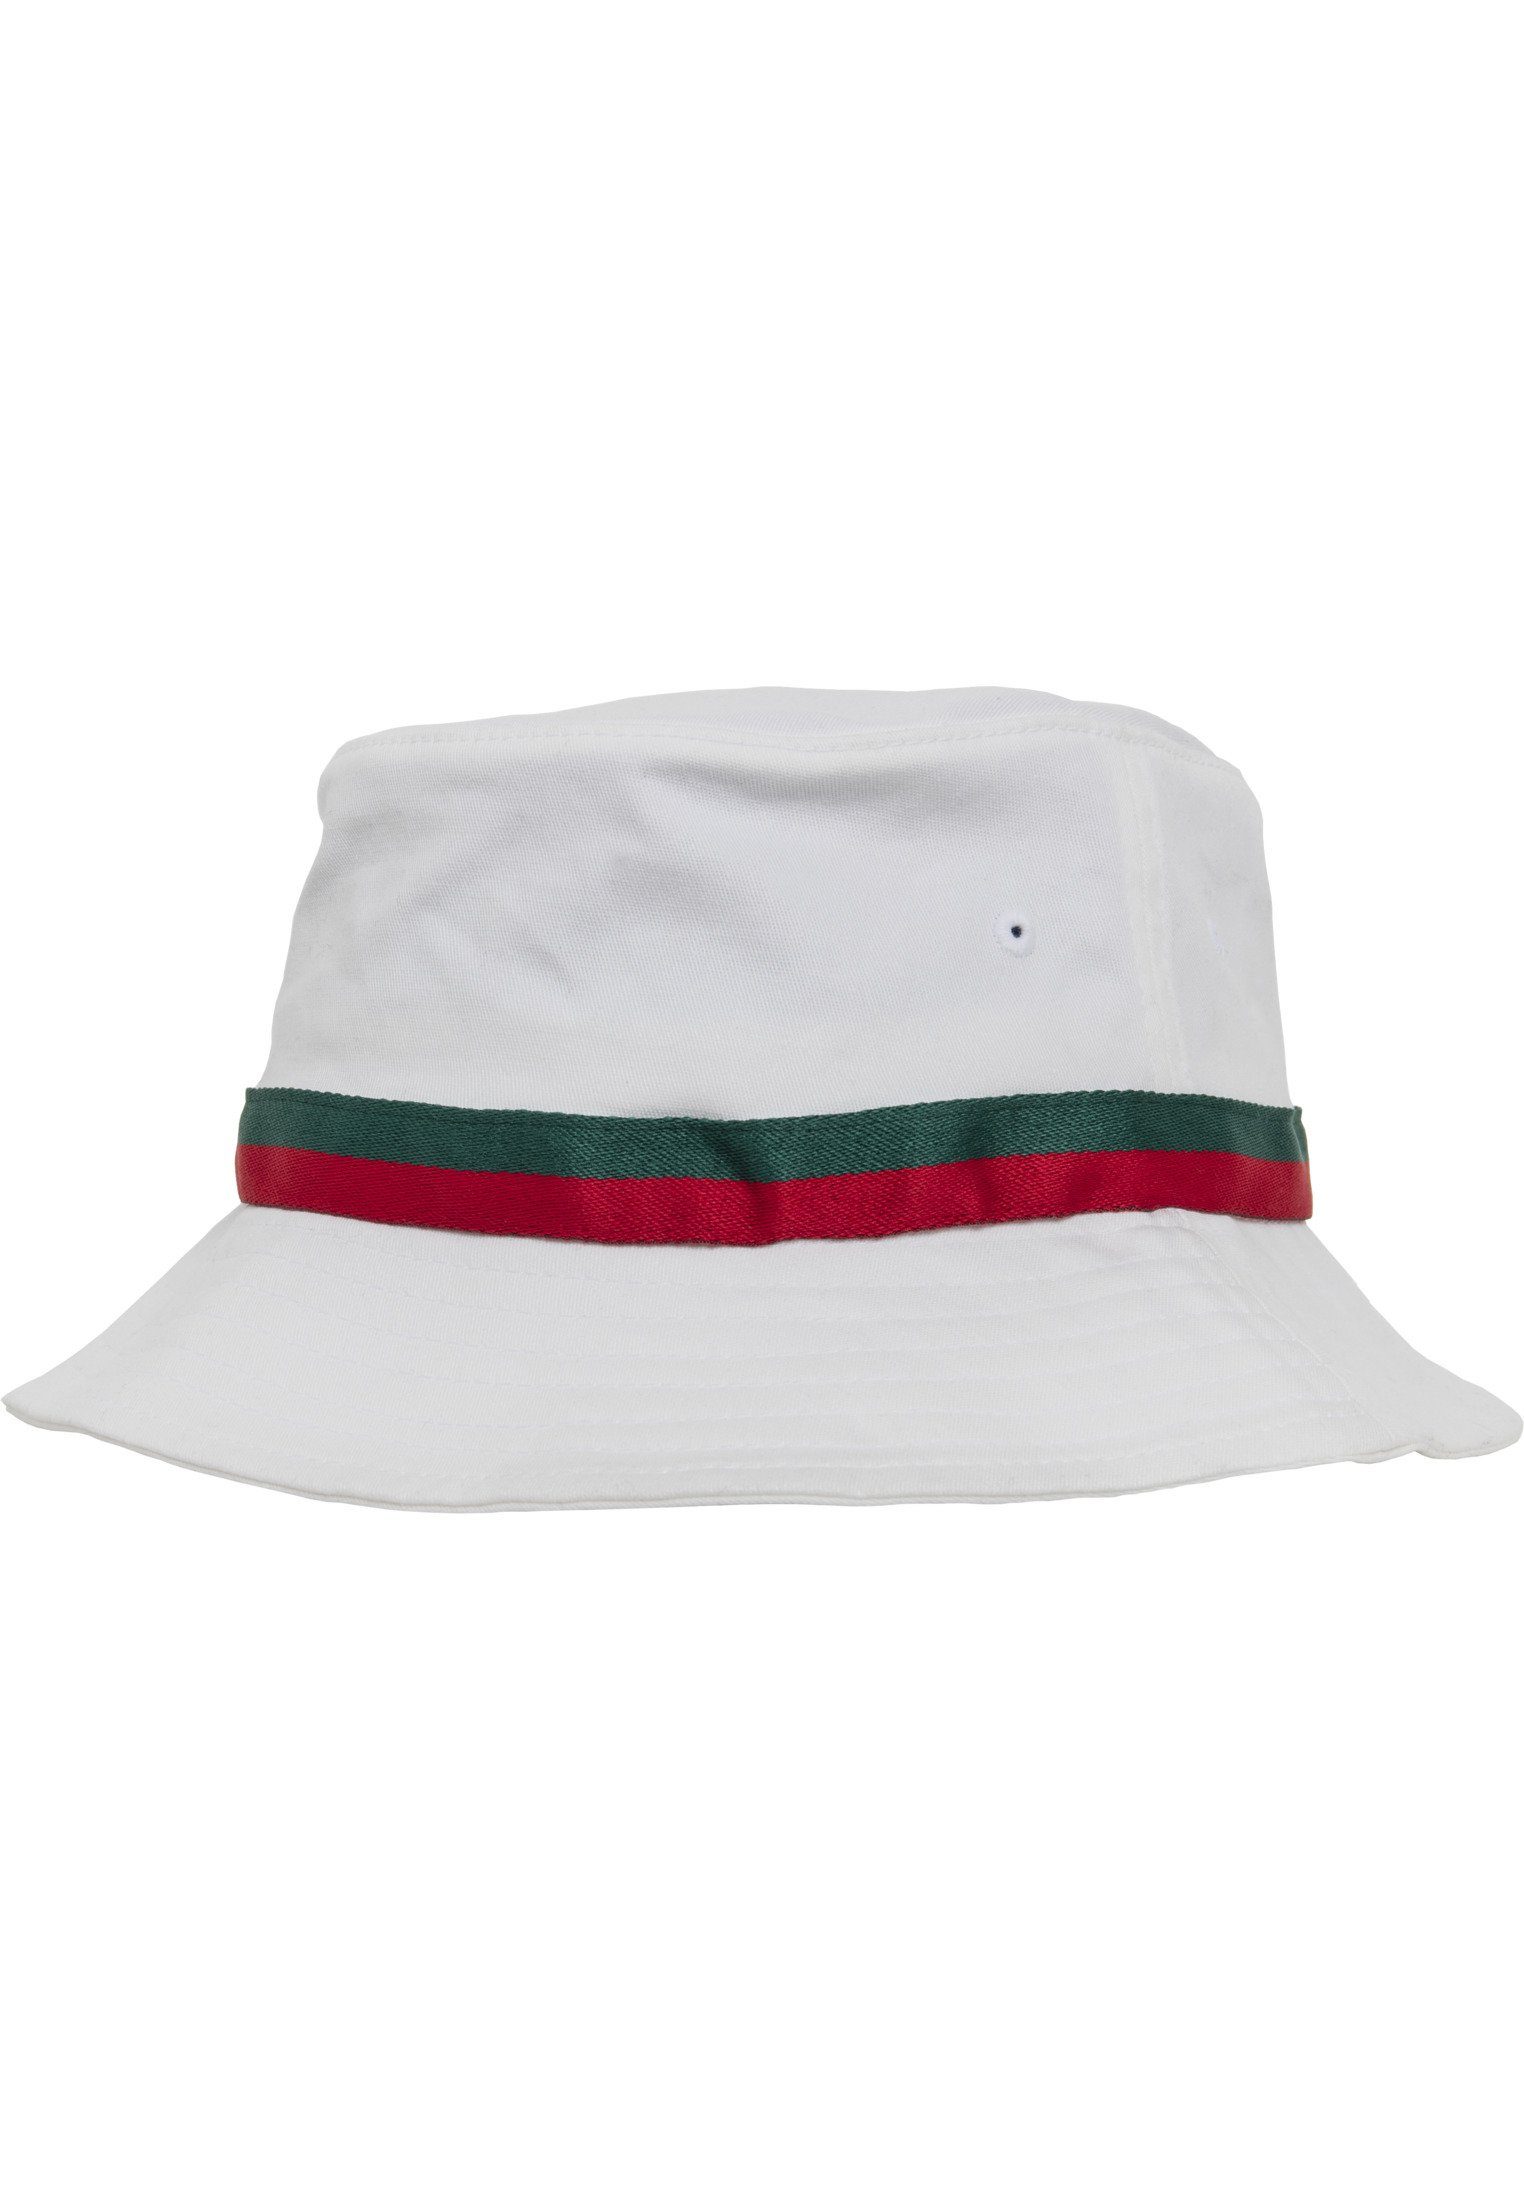 Hat Bucket Bucket Stripe white/firered/green Hat Cap Flexfit Flex